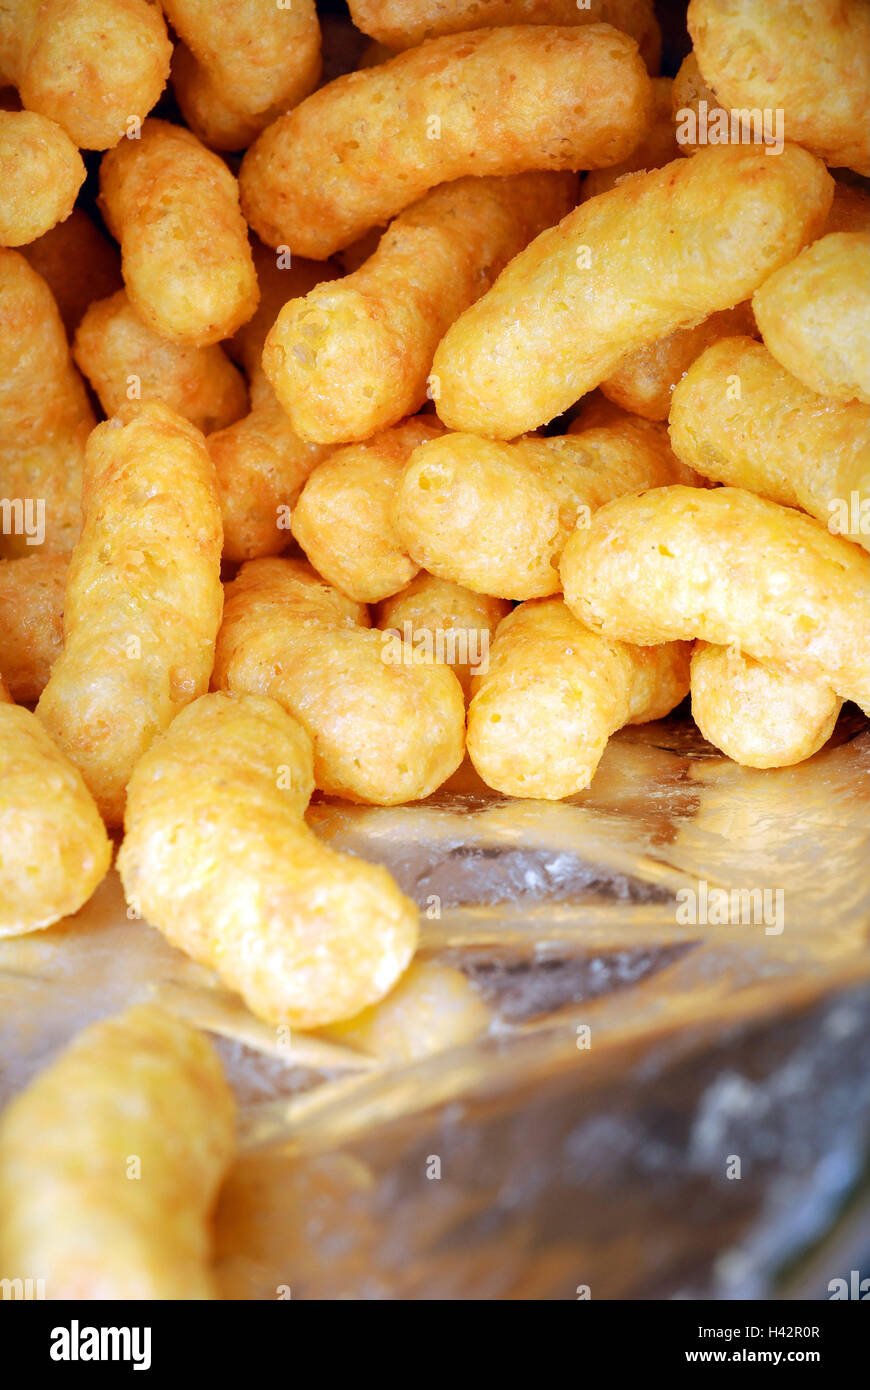 Cheetos Puffs - Silmon Wholesale